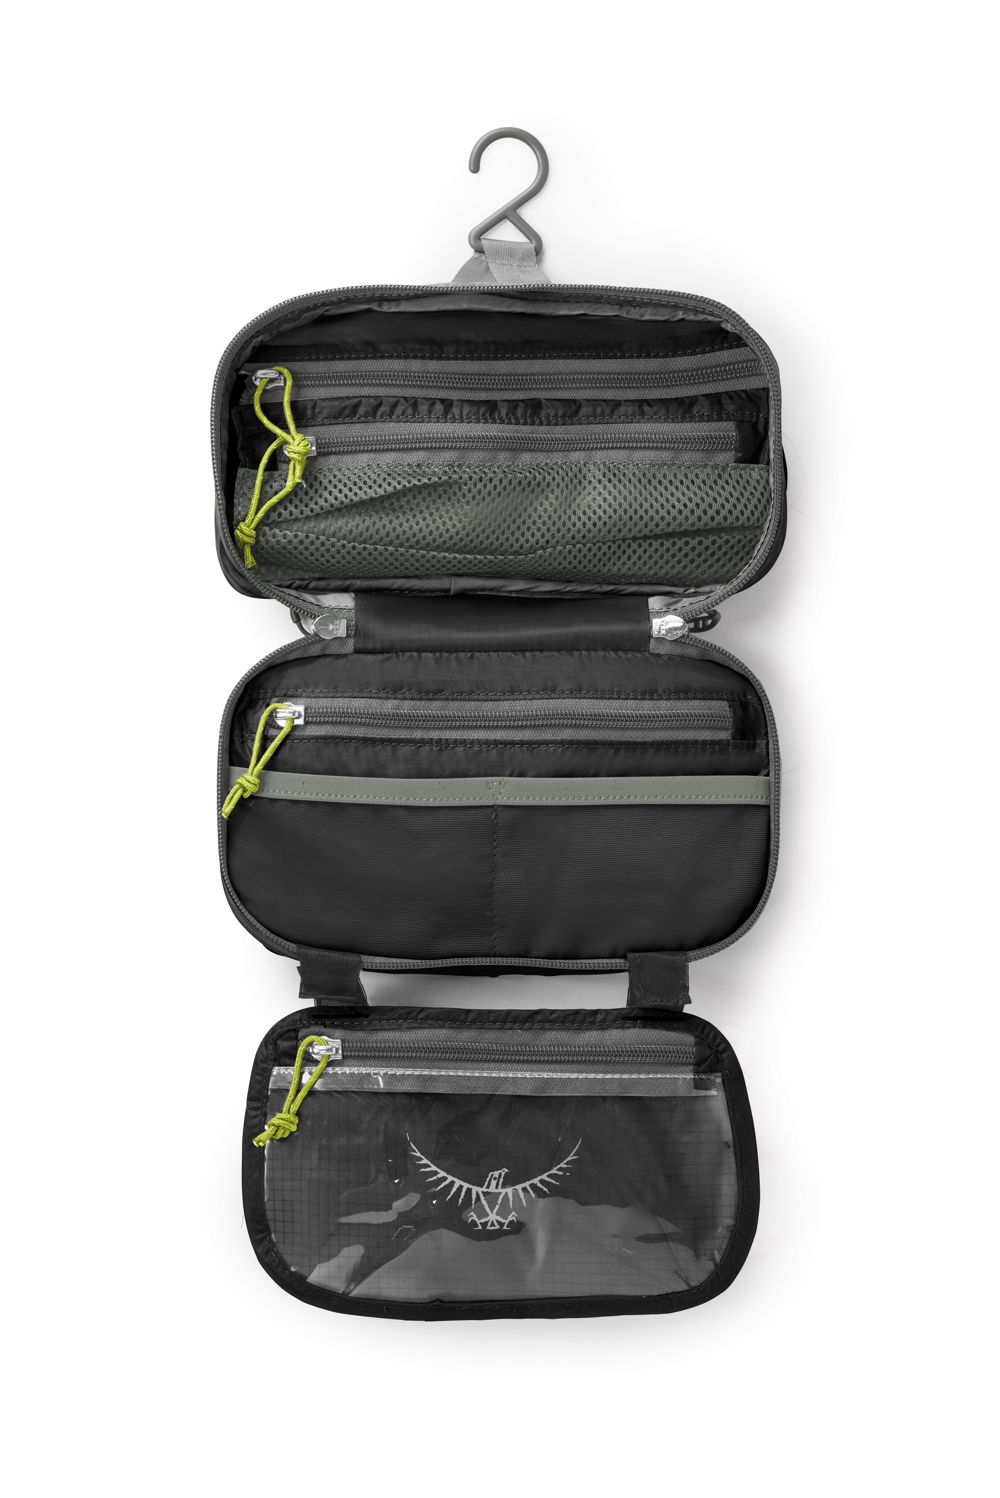 Osprey - Ultralight Zip Washbag - €30,-